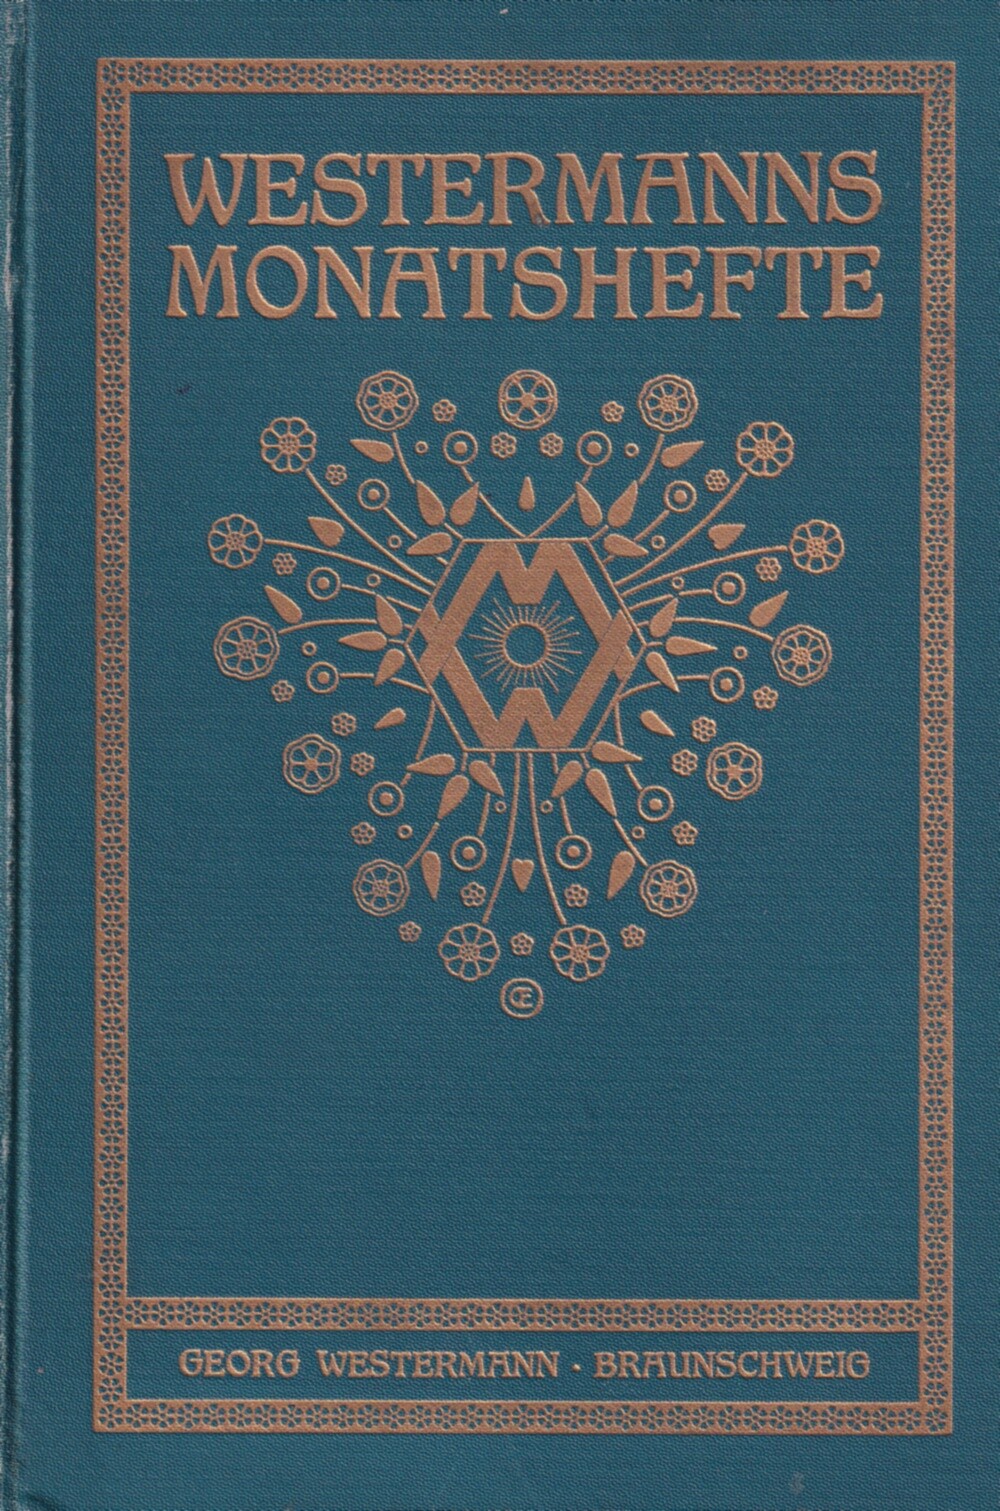 Westermanns Monatshefte 1916 - 1917 (Kulturverein Guntersblum CC BY-NC-SA)